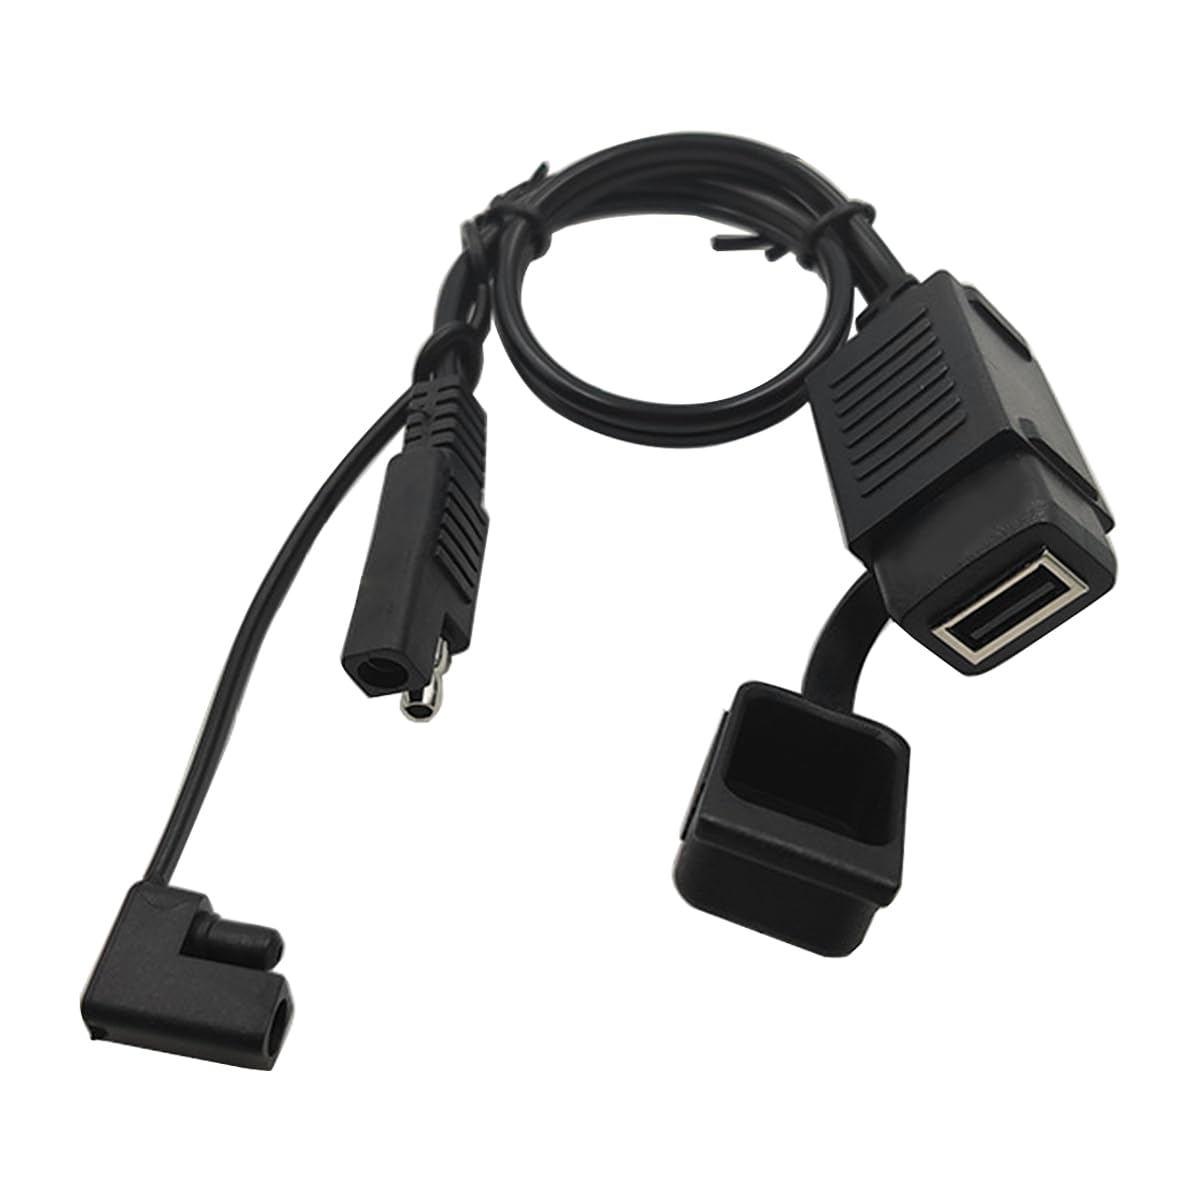 CGEAMDY Ladegerät Kit SAE zu USB Adapter Kabel, Motorrad Telefon Ladegerät 5V 2.1A, Kompatibel mit Smartphone Tablet, Handy GPS Ladekabel Adapterplatte, Charge On Motor von CGEAMDY